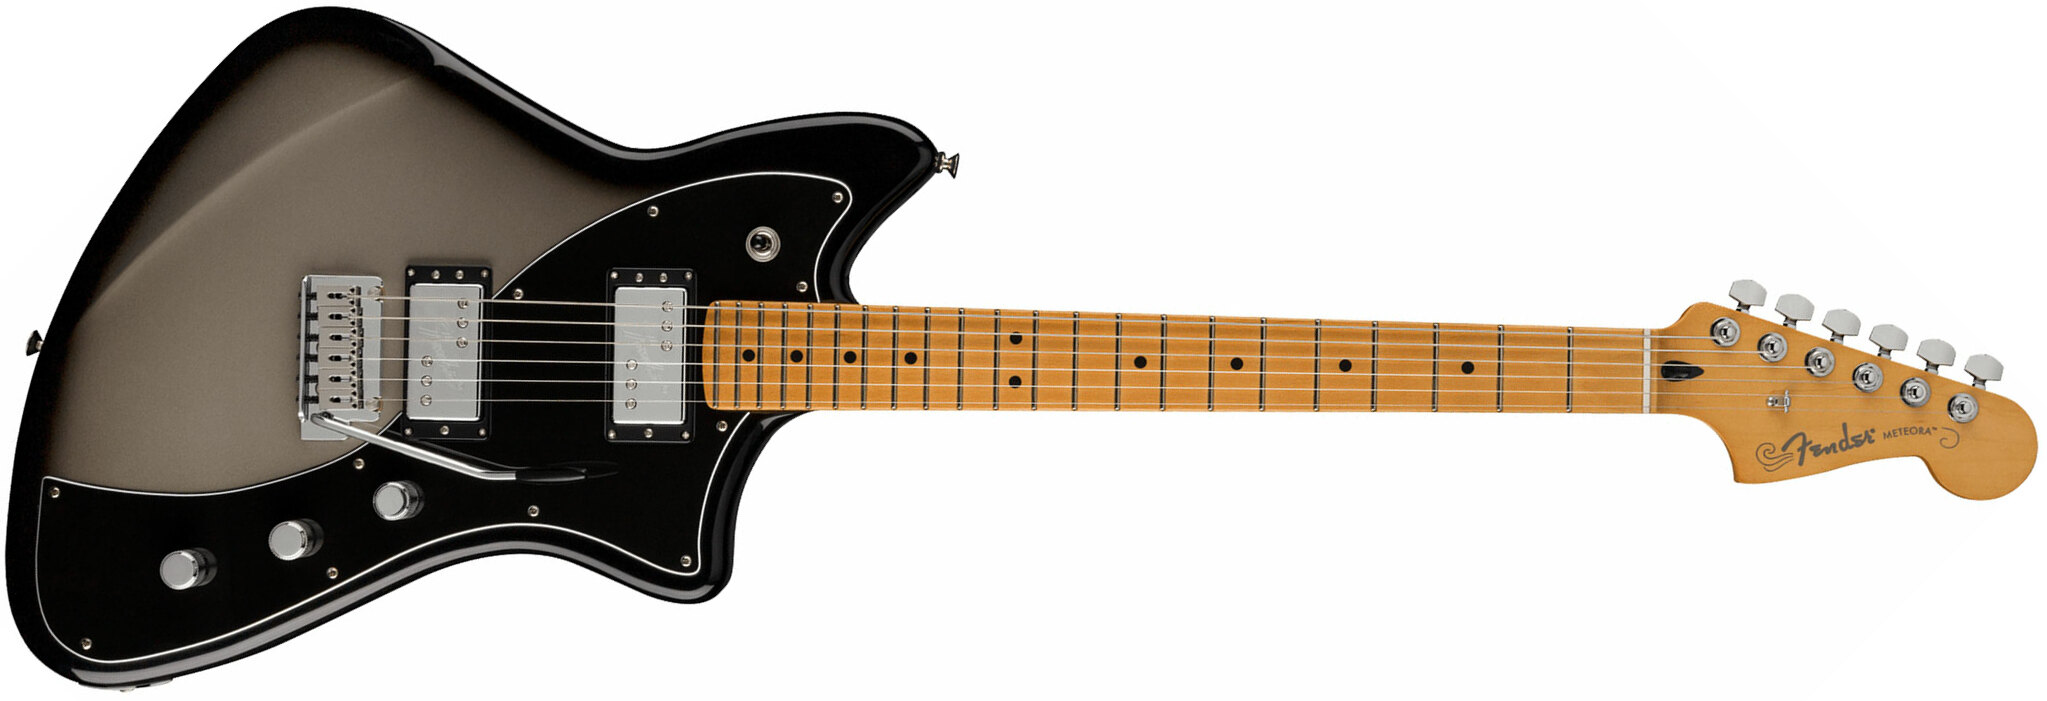 Fender Meteora Player Plus Hh Mex 2h Ht Mn - Silver Burst - Retro rock electric guitar - Main picture